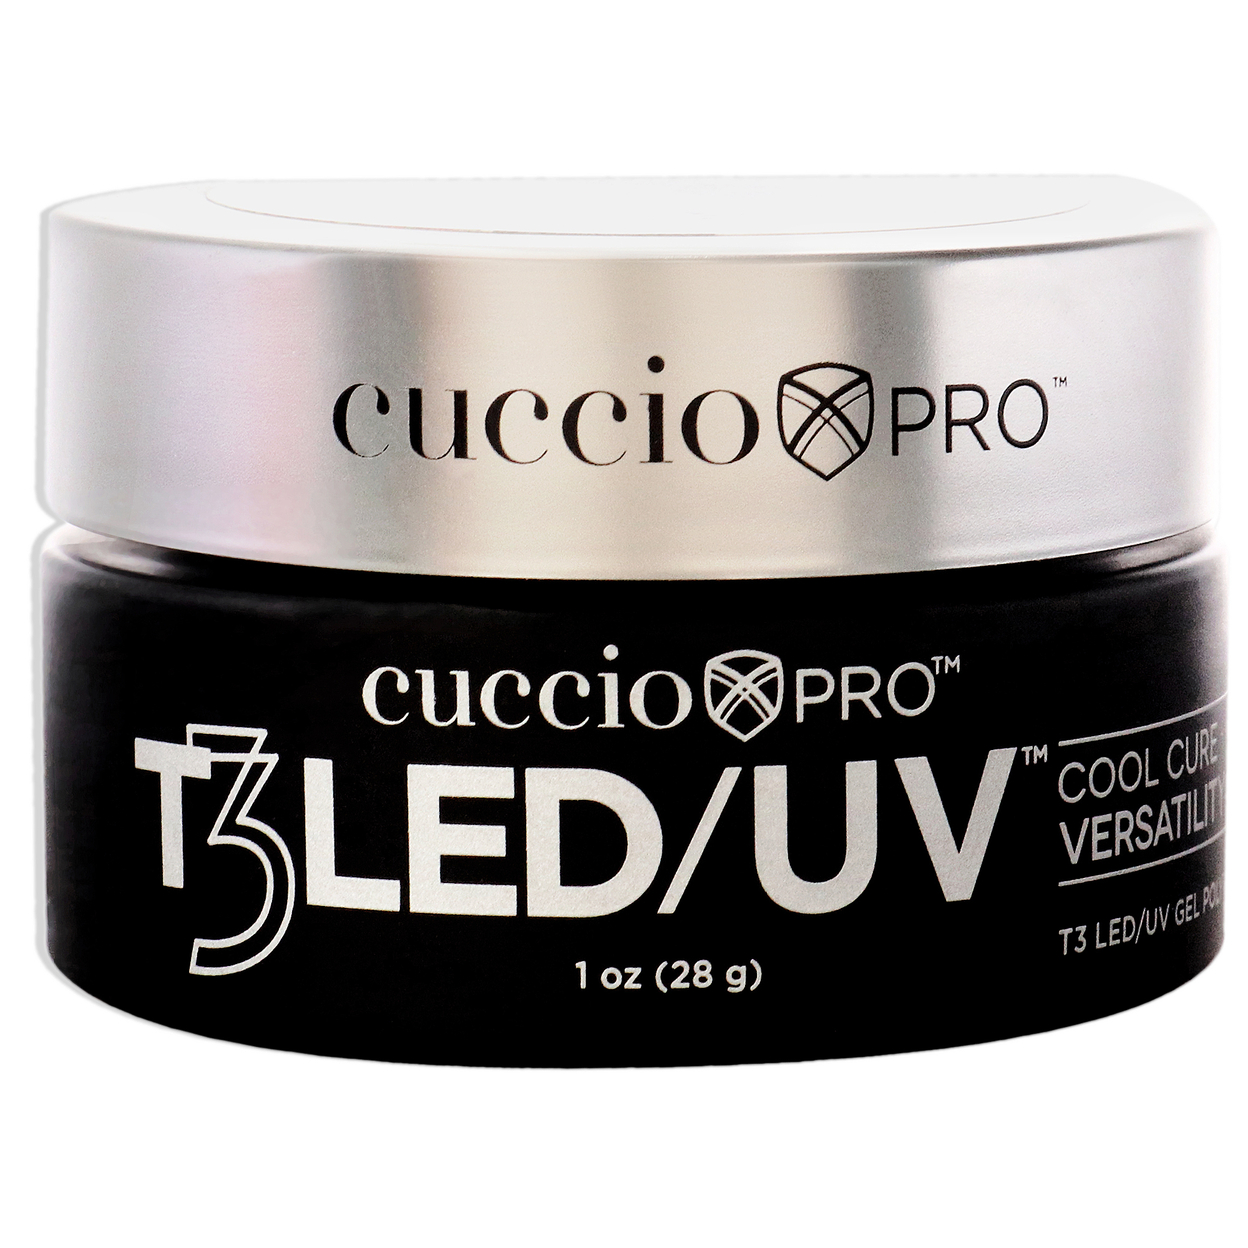 Cuccio Pro T3 Cool Cure Versatility Gel - Kekes Glitter Nail Gel 1 Oz